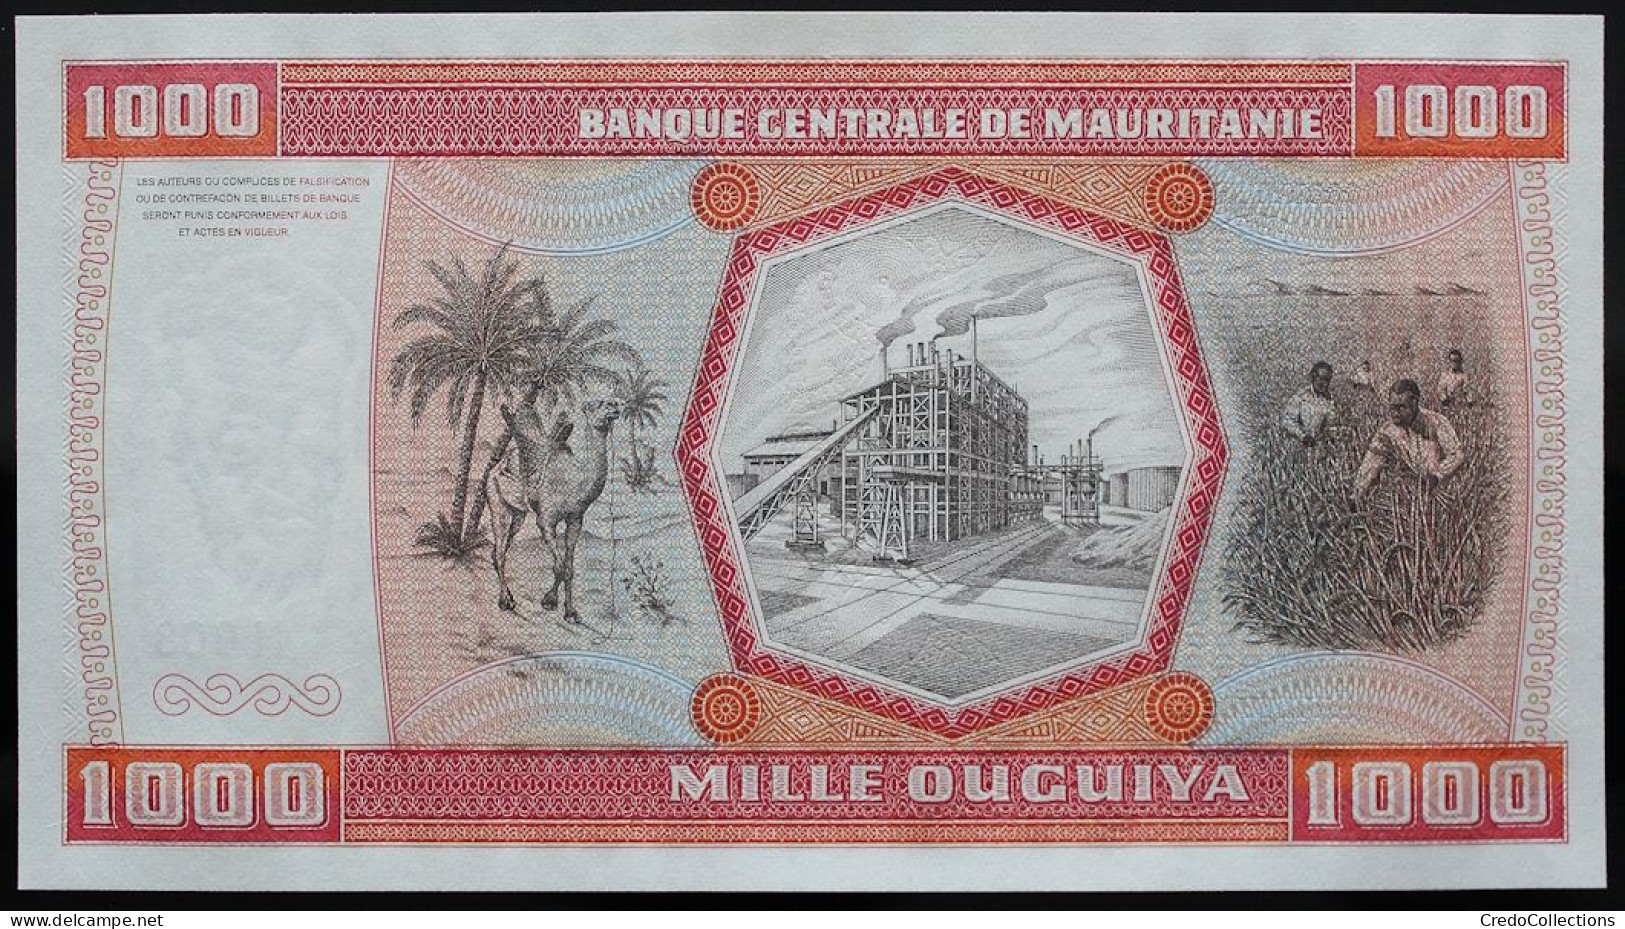 Mauritanie - 1000 Ouguiya - 1981 - PICK 3Da - NEUF - Mauritanie